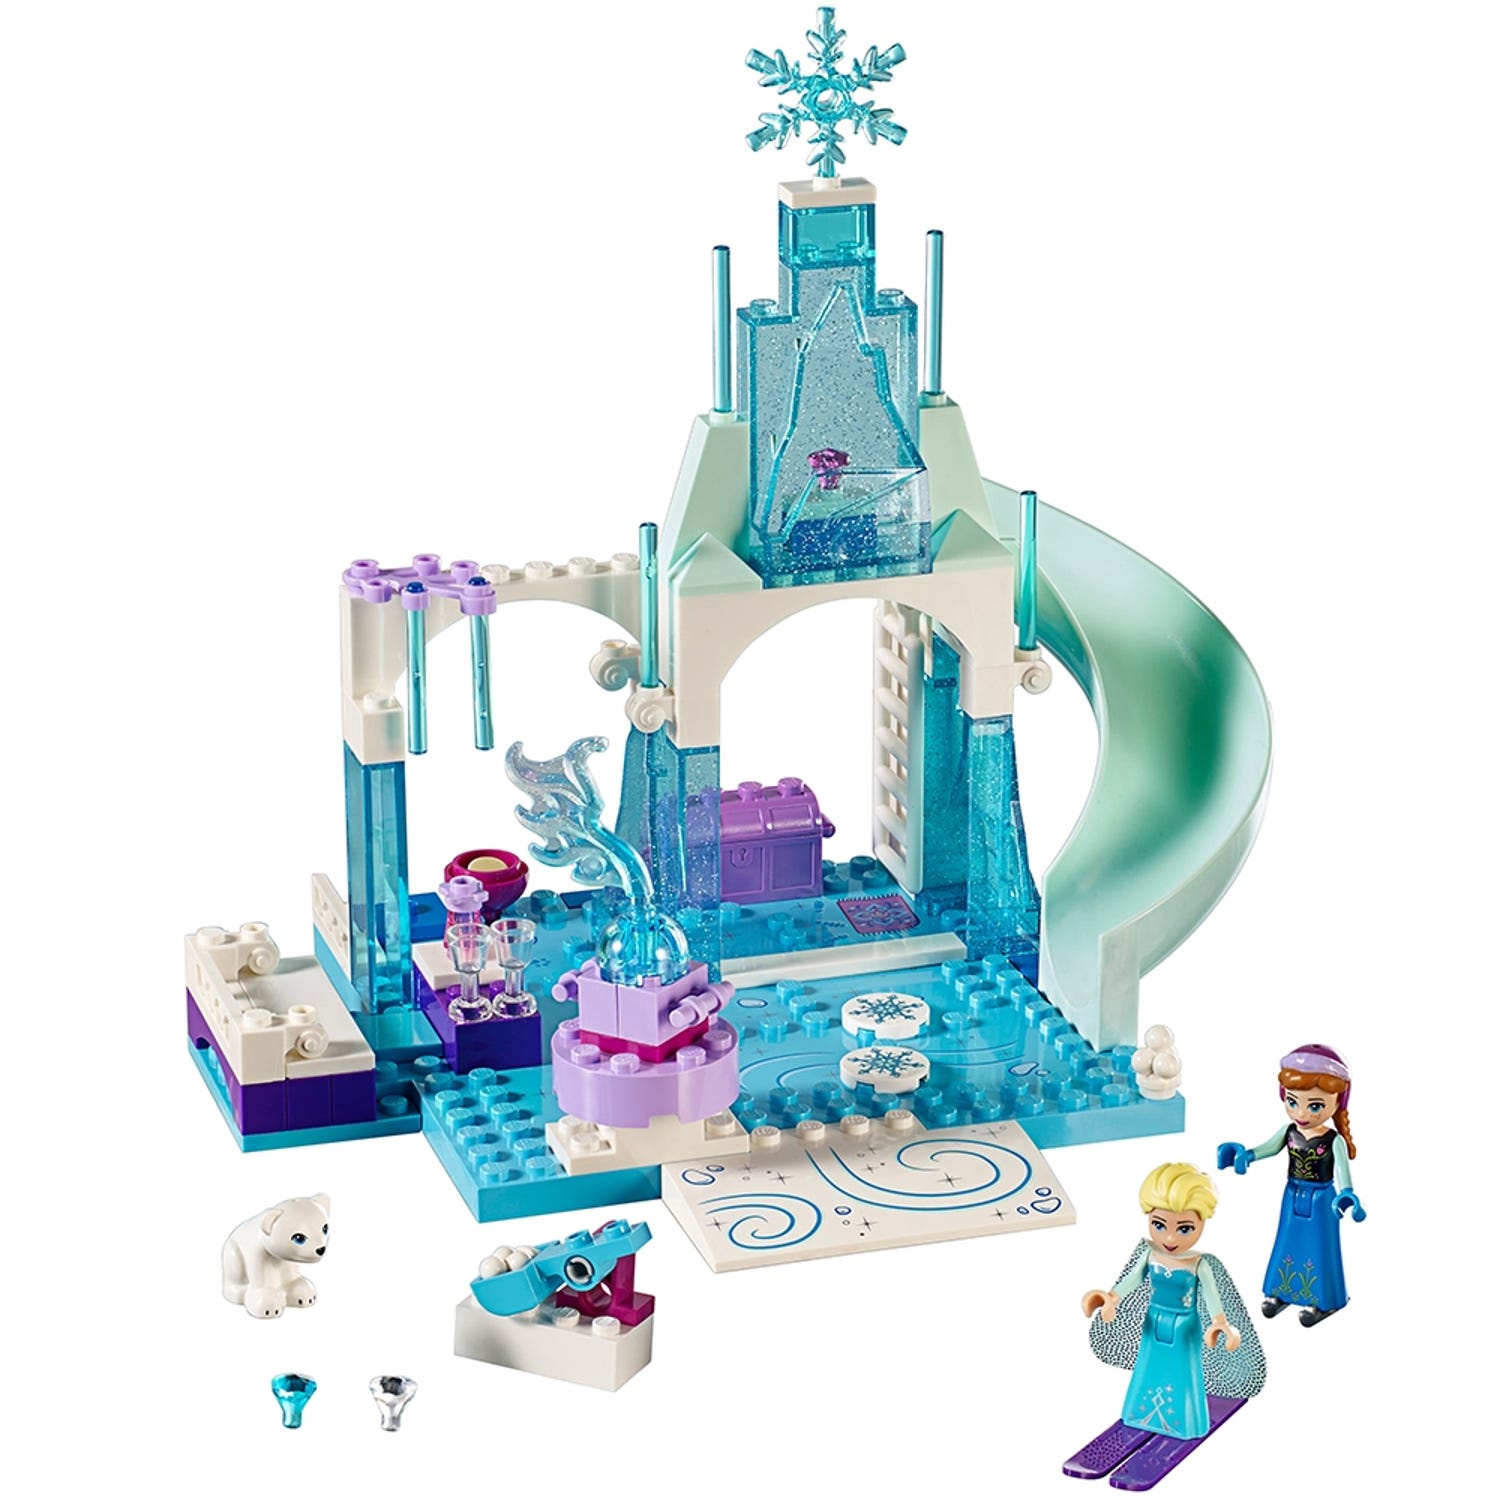 Hylde Barbermaskine moderat Anna & Elsa's Frozen Playground 10736 | Juniors | Buy online at the  Official LEGO® Shop US